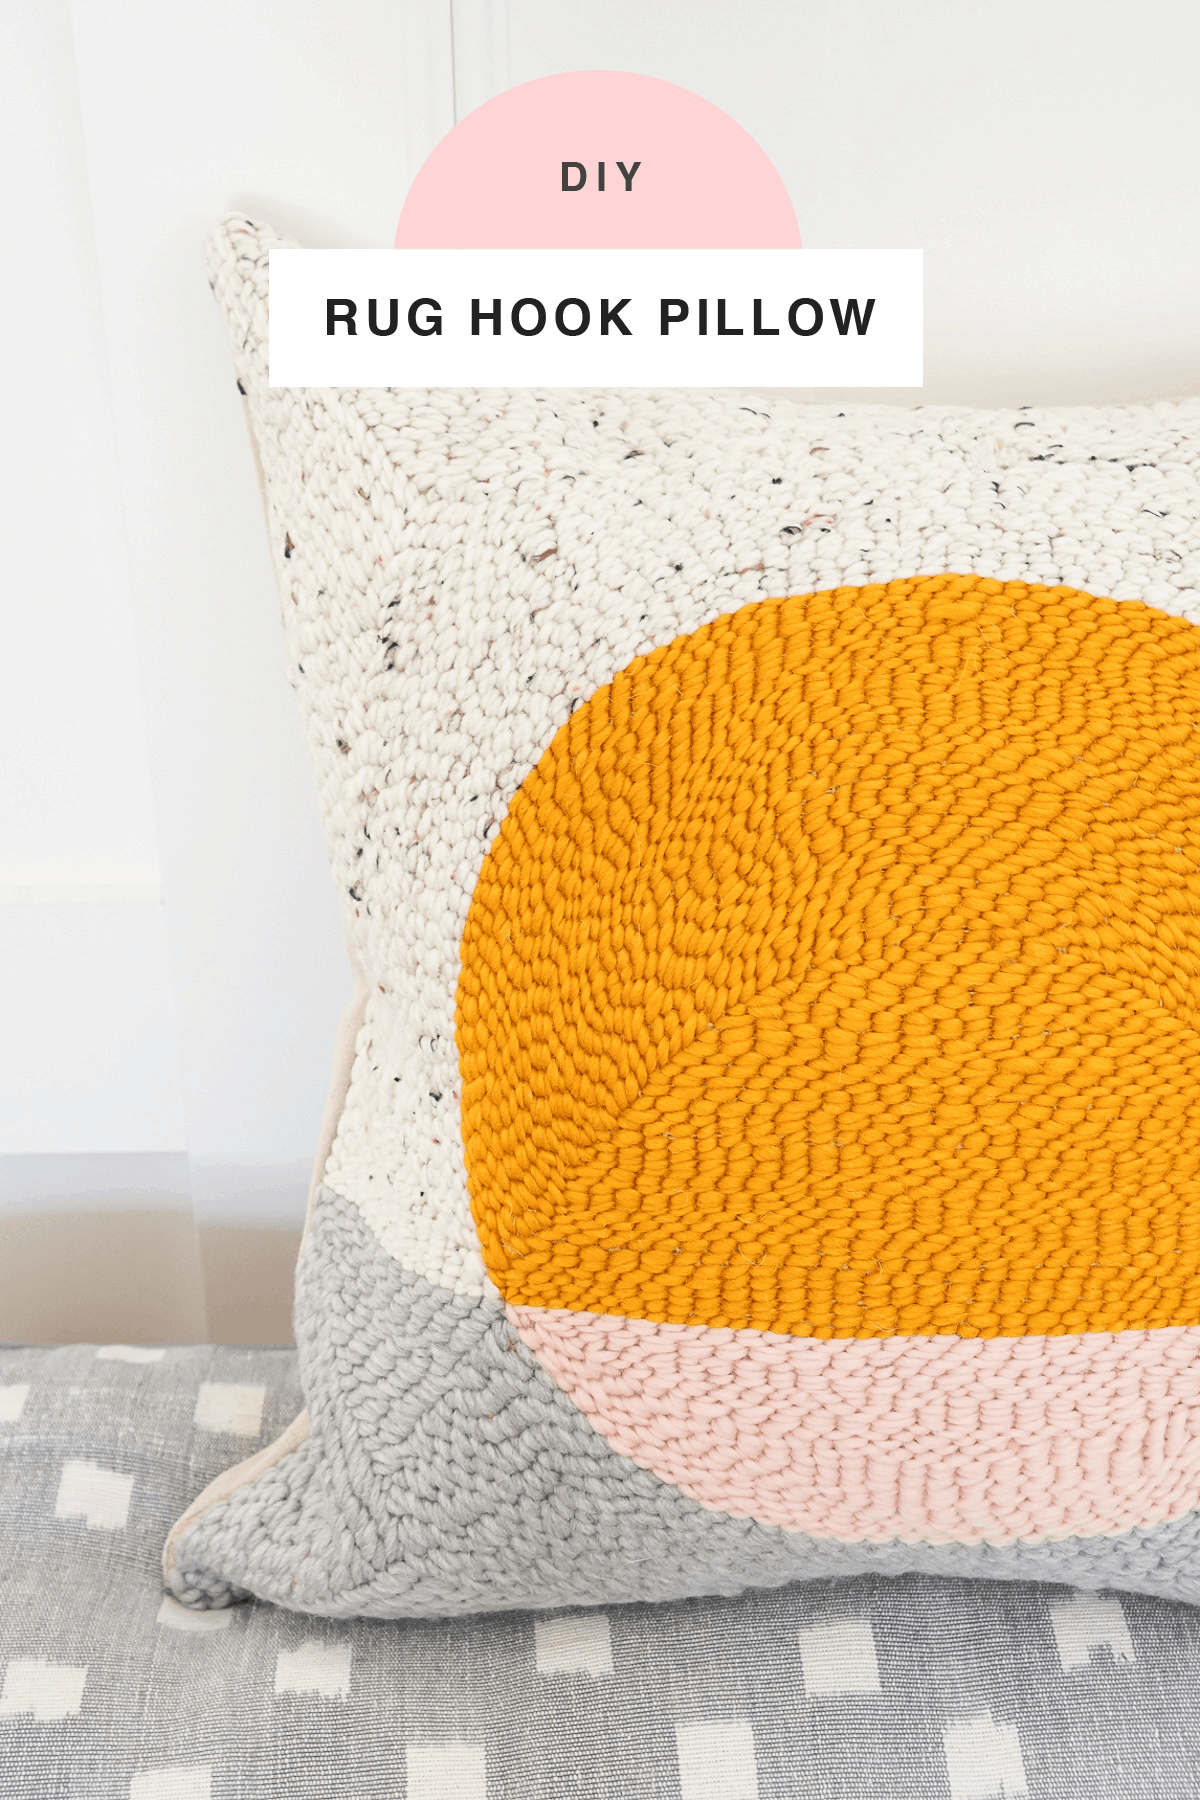 DIY Rug Hook Pillow by top Houston lifestyle blogger Ashley Rose of Sugar and Cloth #rughook #diy #poillow #craft #diypillow #doityourself #pillowcase #homedecor #diydecor